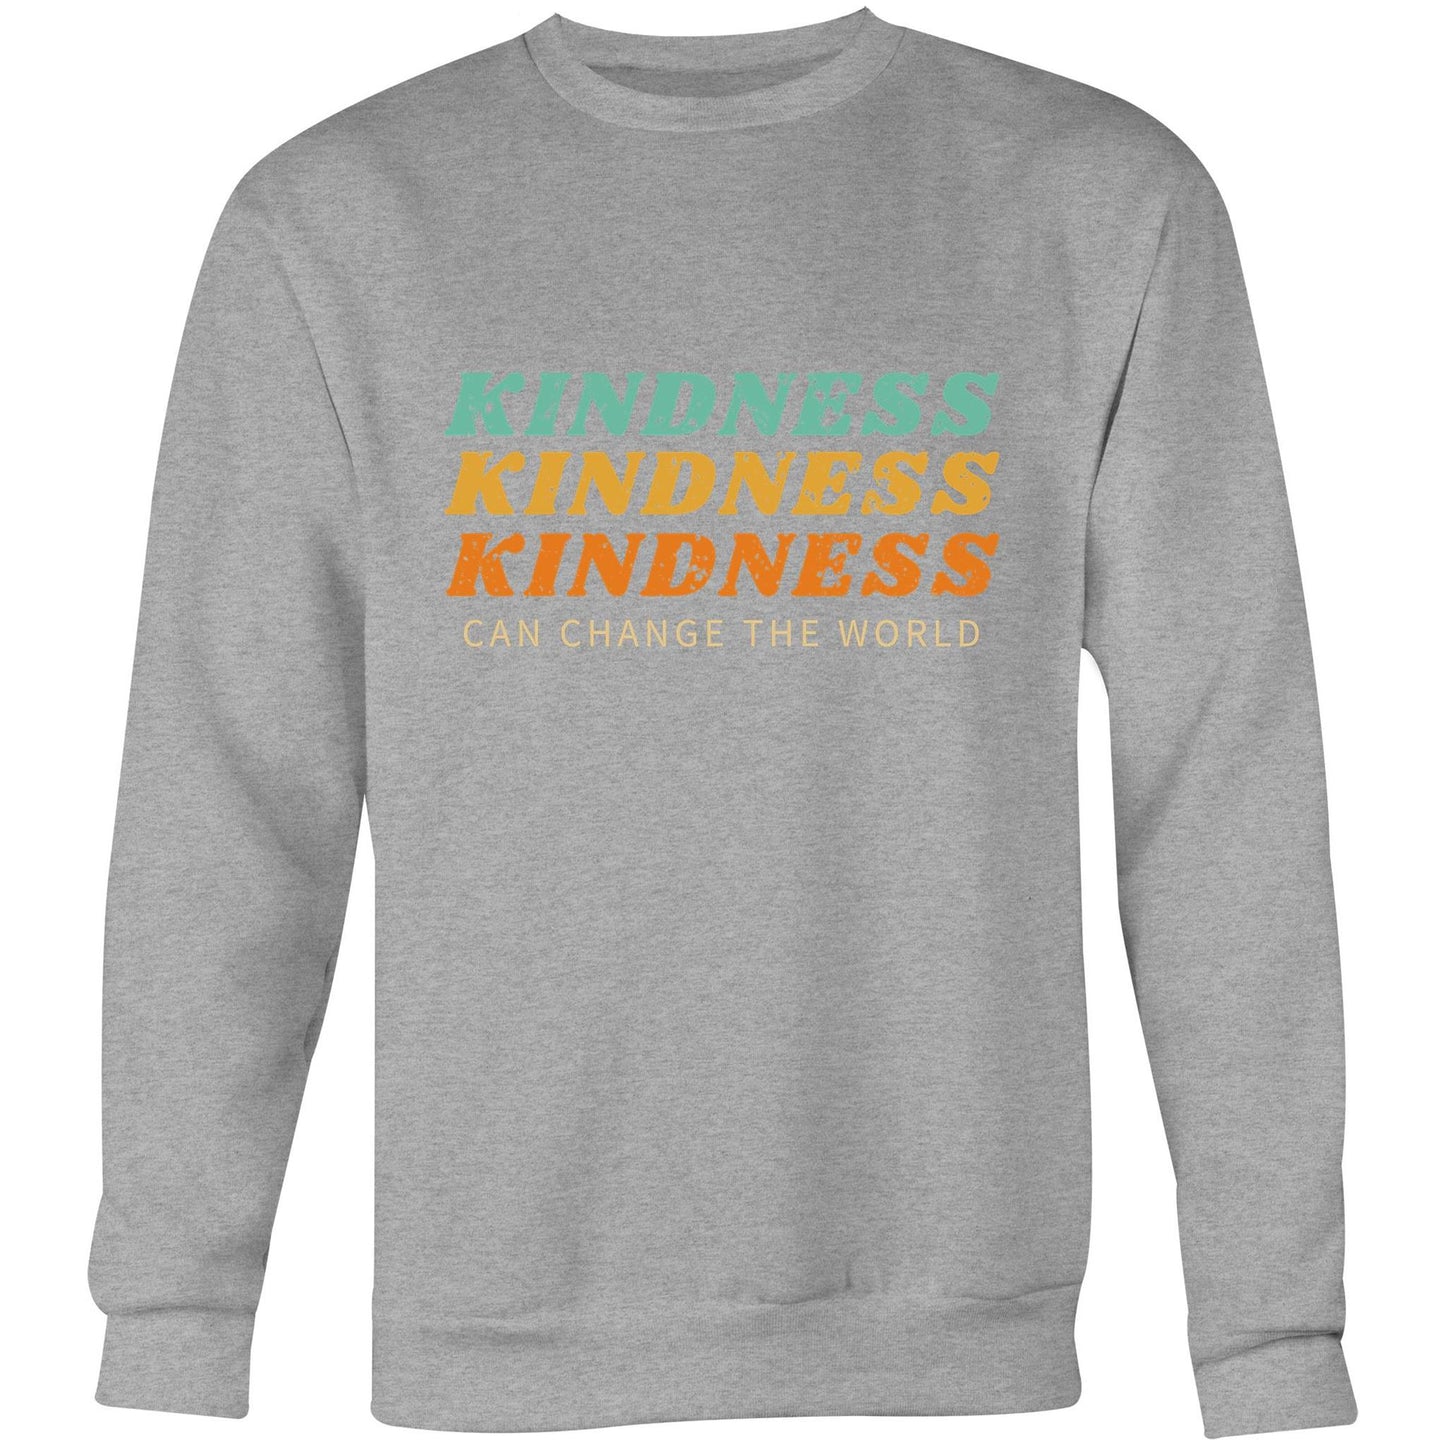 Kindness Can Change The World - Crew Sweatshirt Grey Marle Sweatshirt Mens Womens